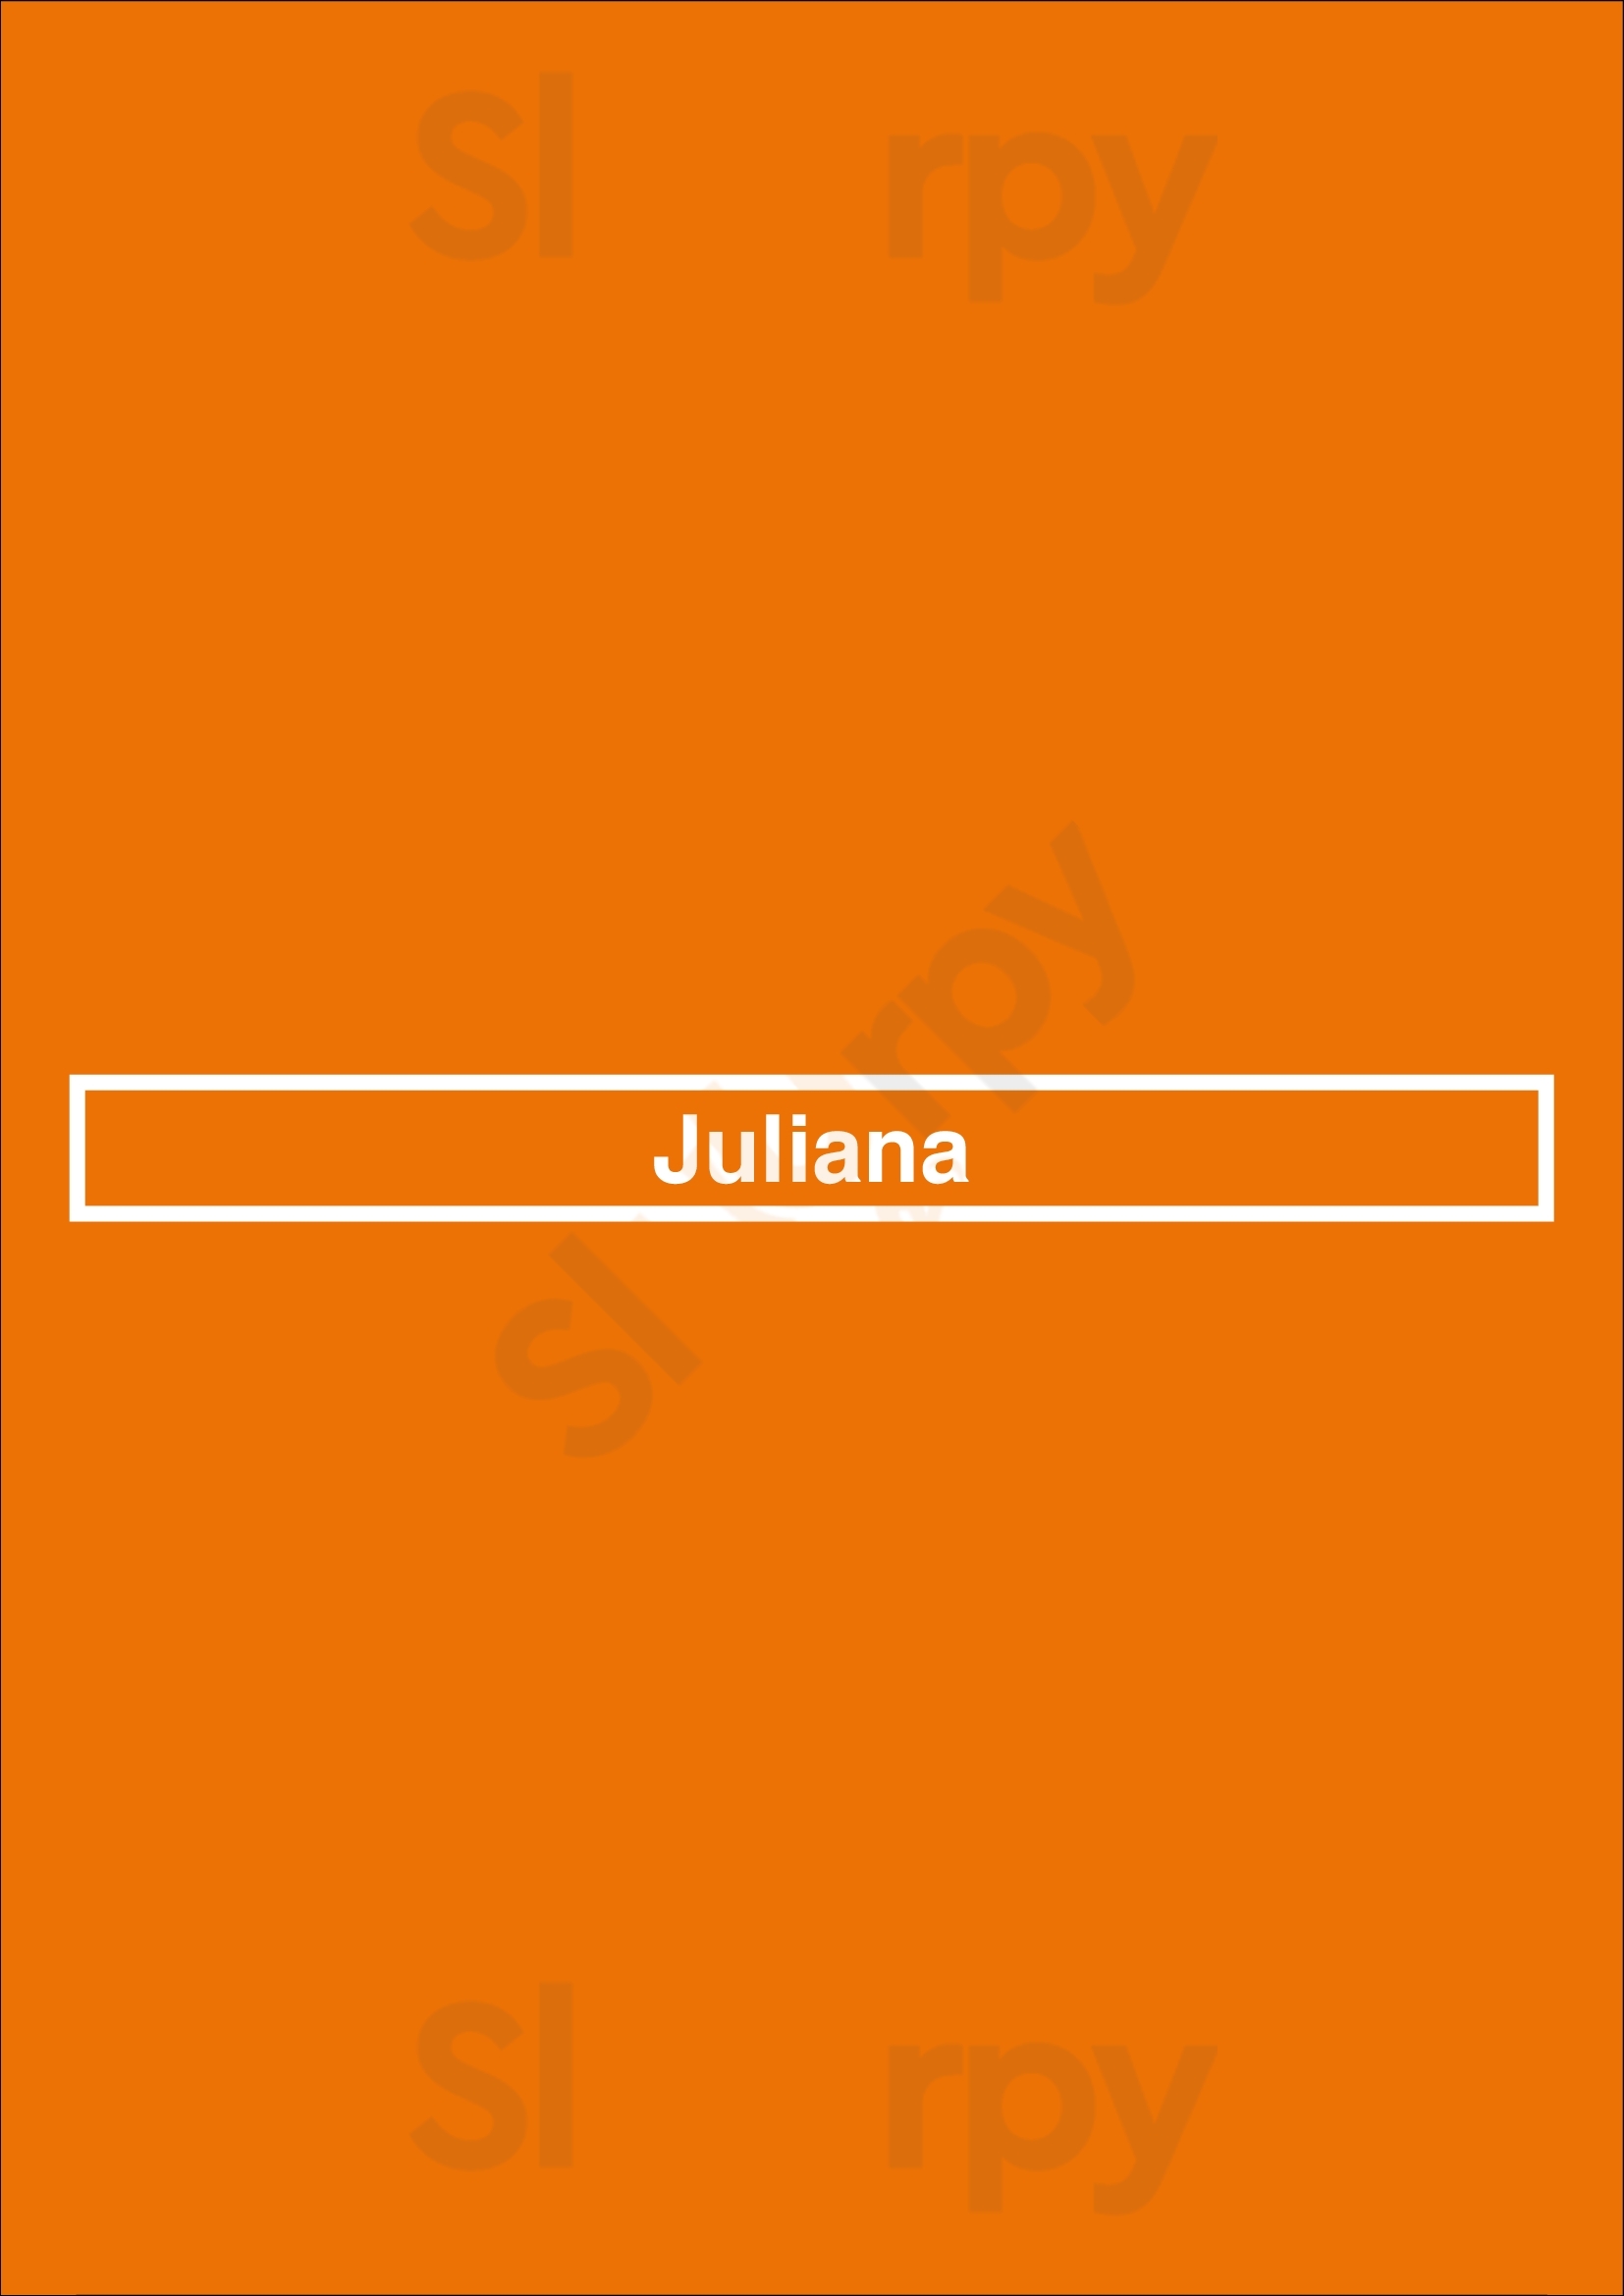 Juliana Chicago Menu - 1